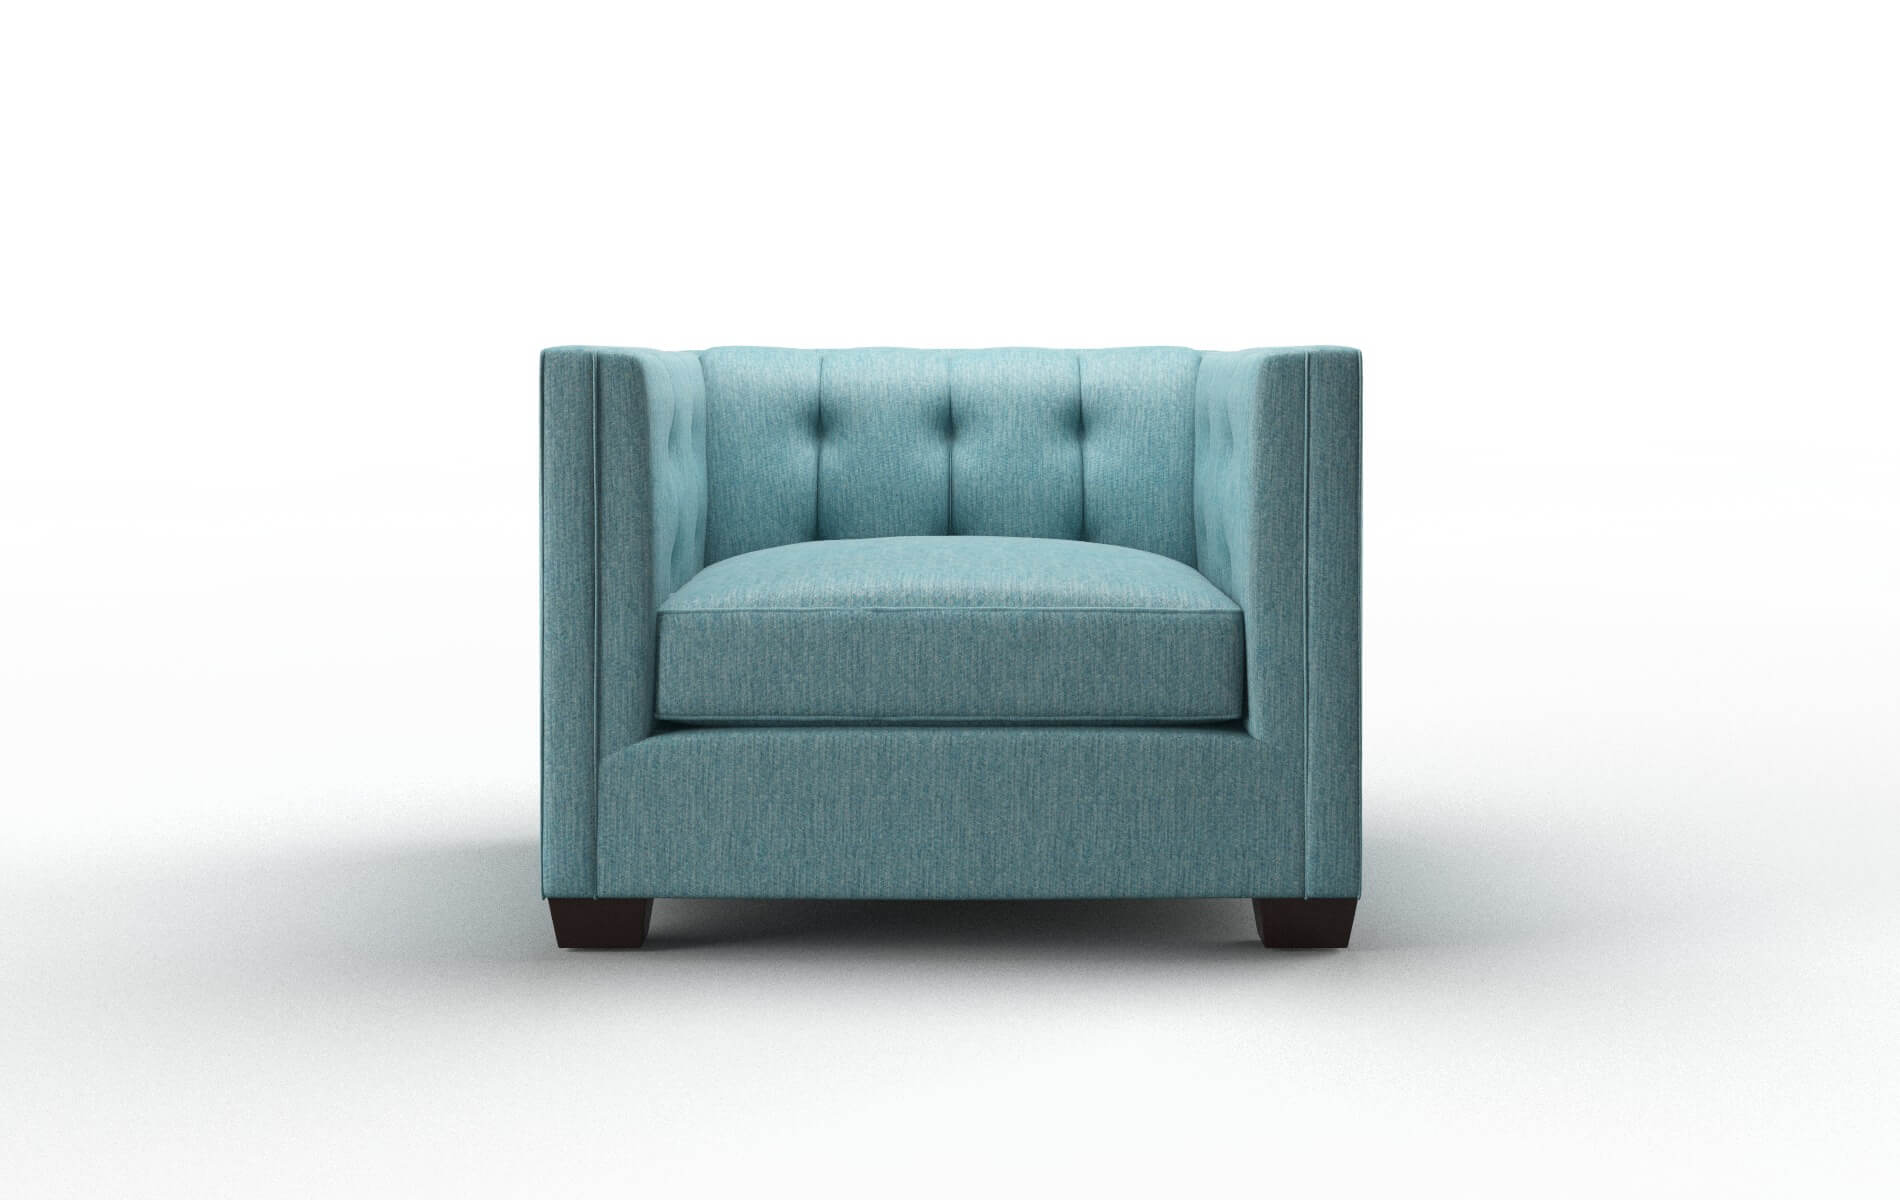 Grant Cosmo Turquoise chair espresso legs